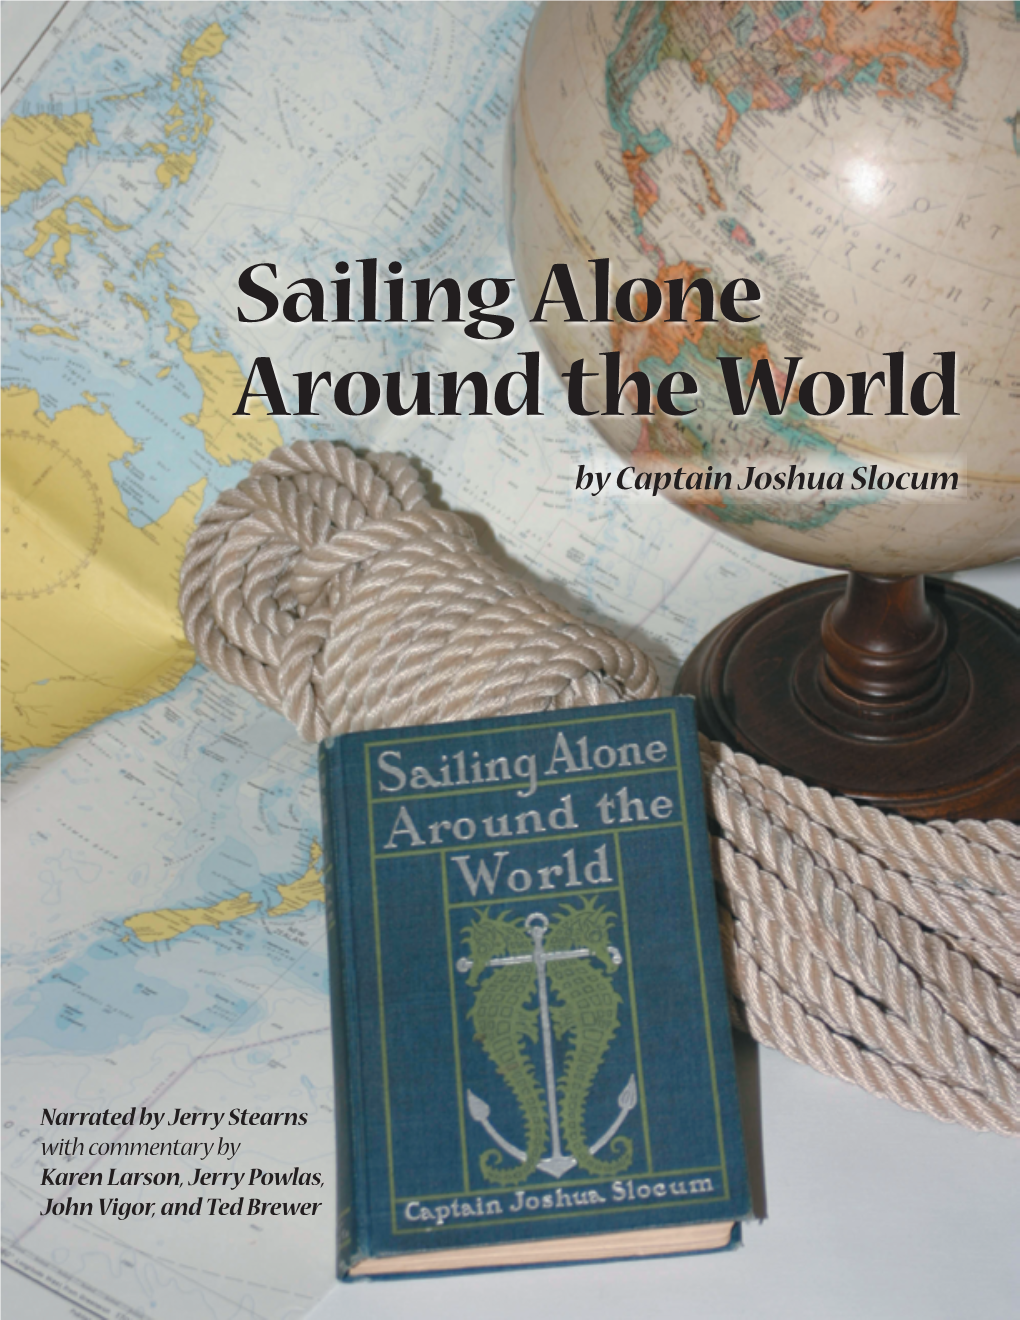 Sailing Alone Around the World by Captain Joshua Slocum